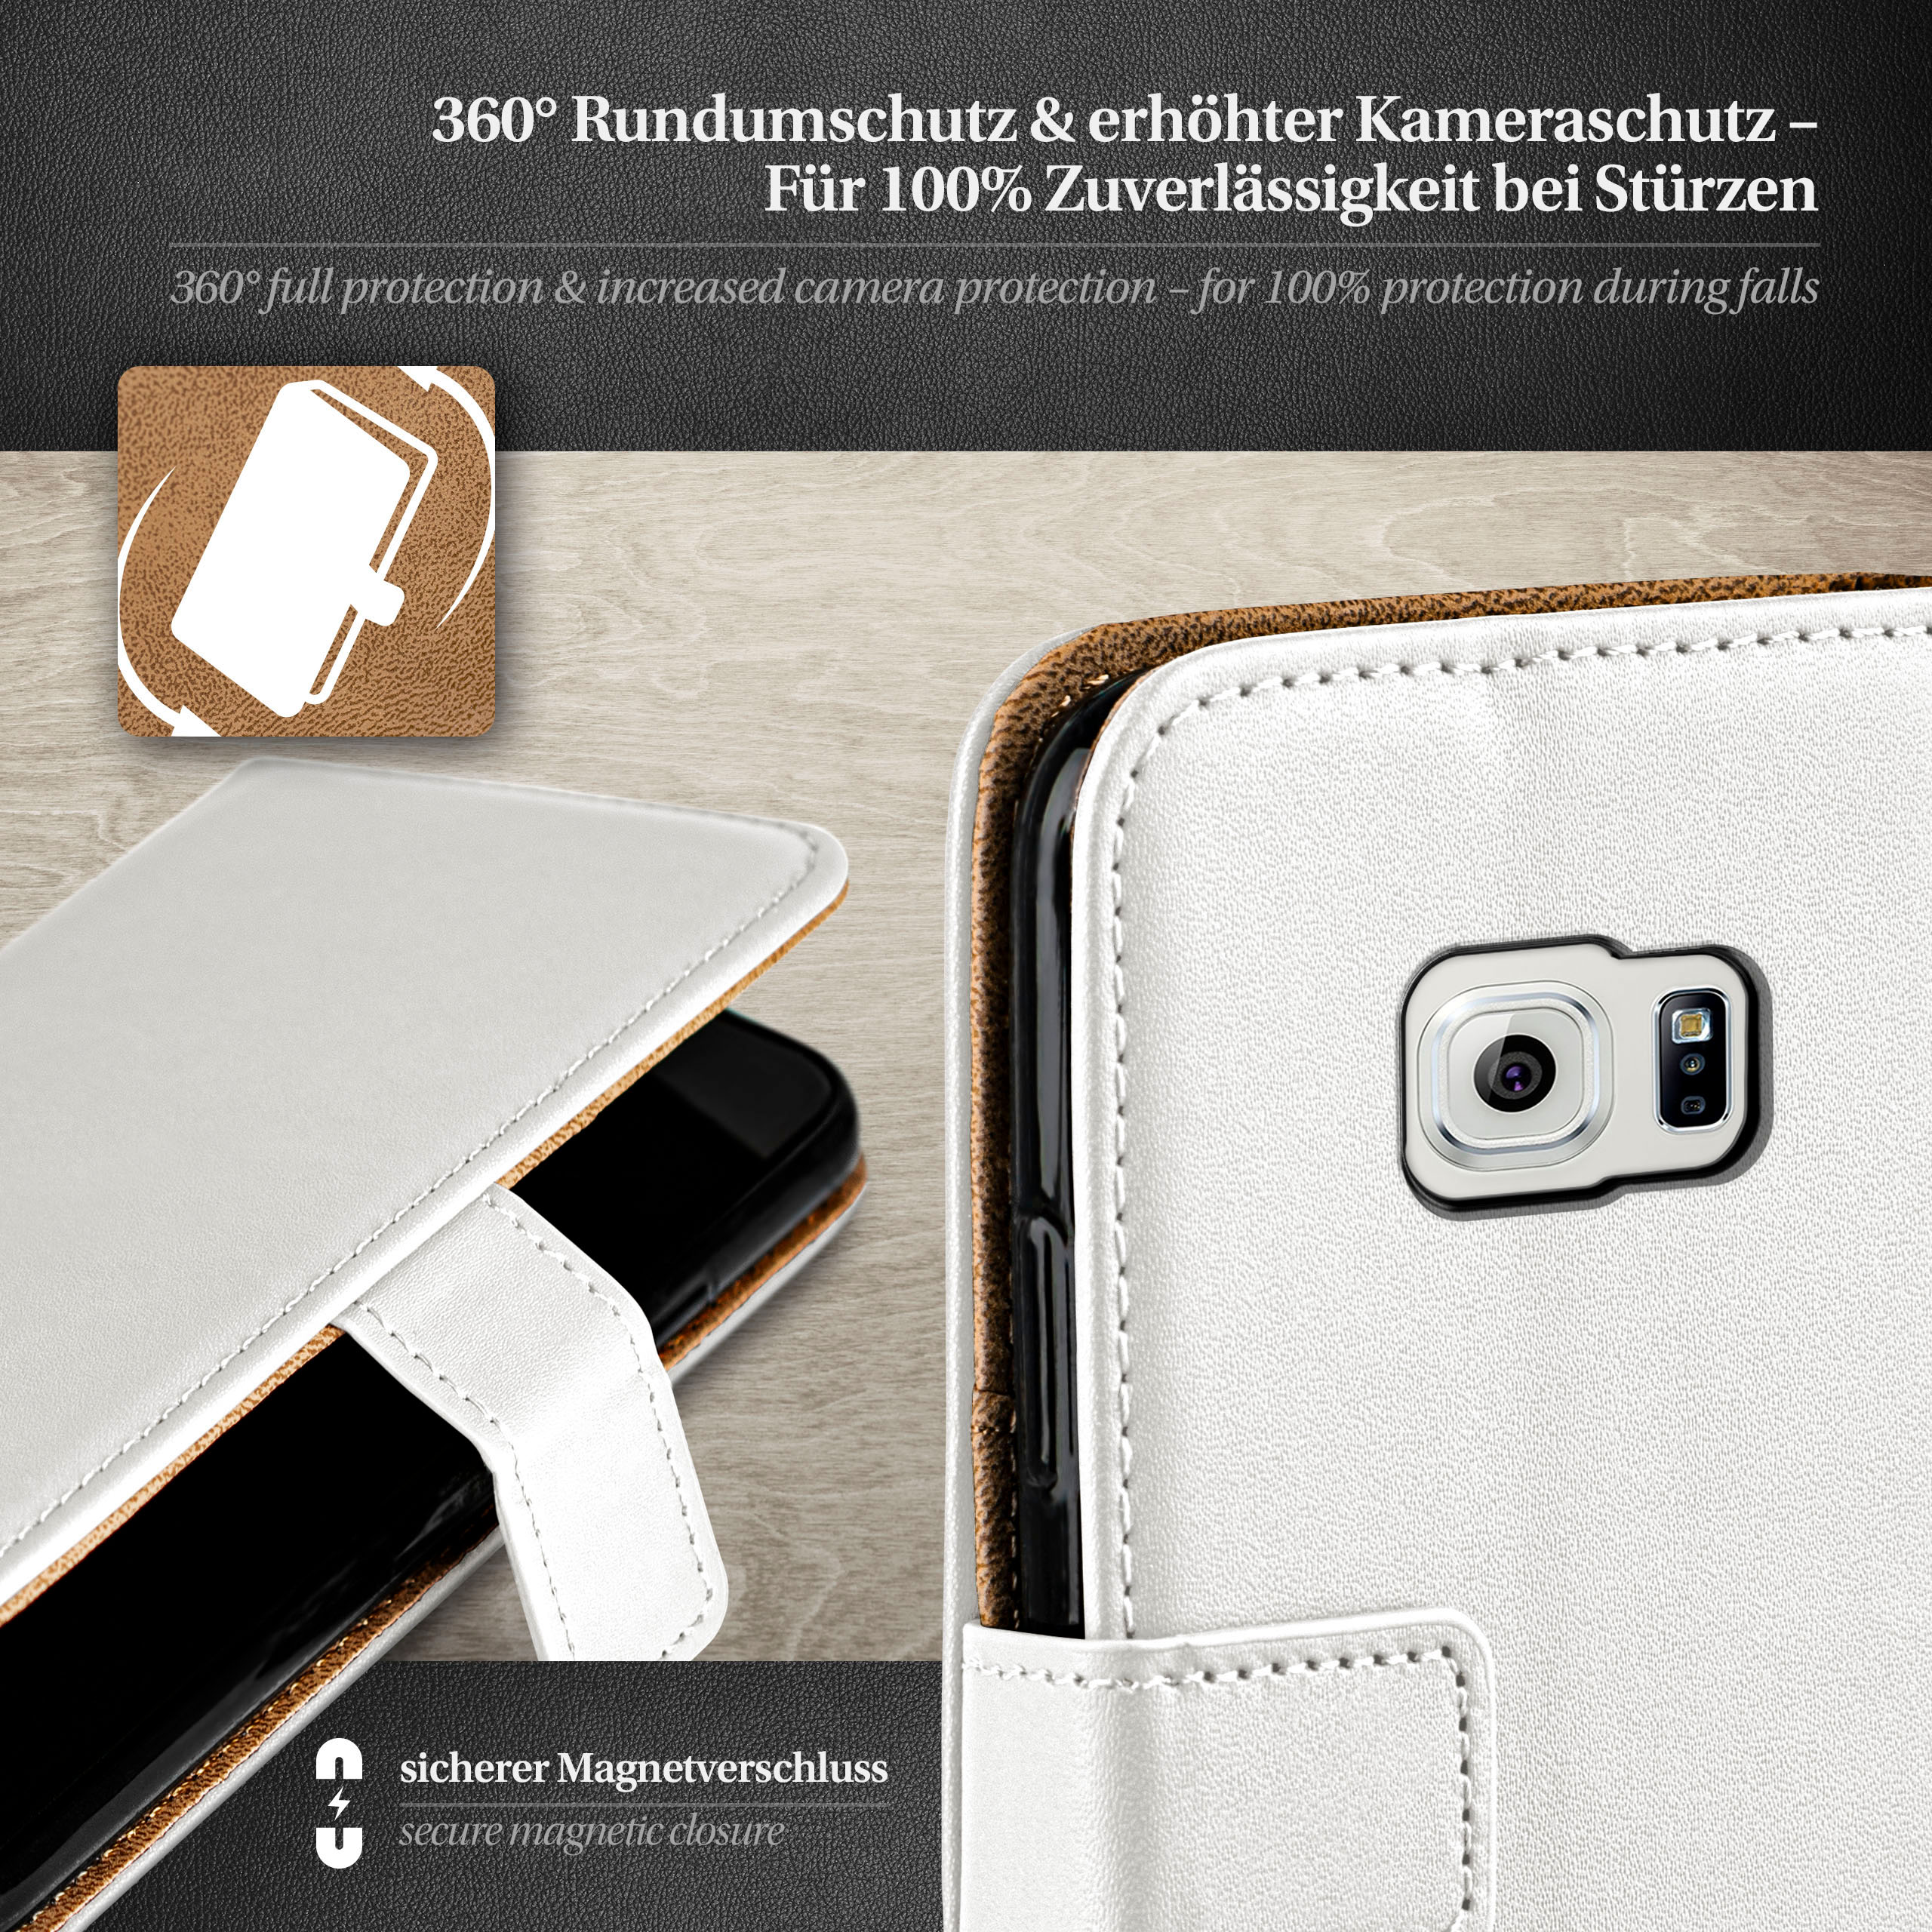 MOEX Book Case, Bookcover, S6, Galaxy Pearl-White Samsung